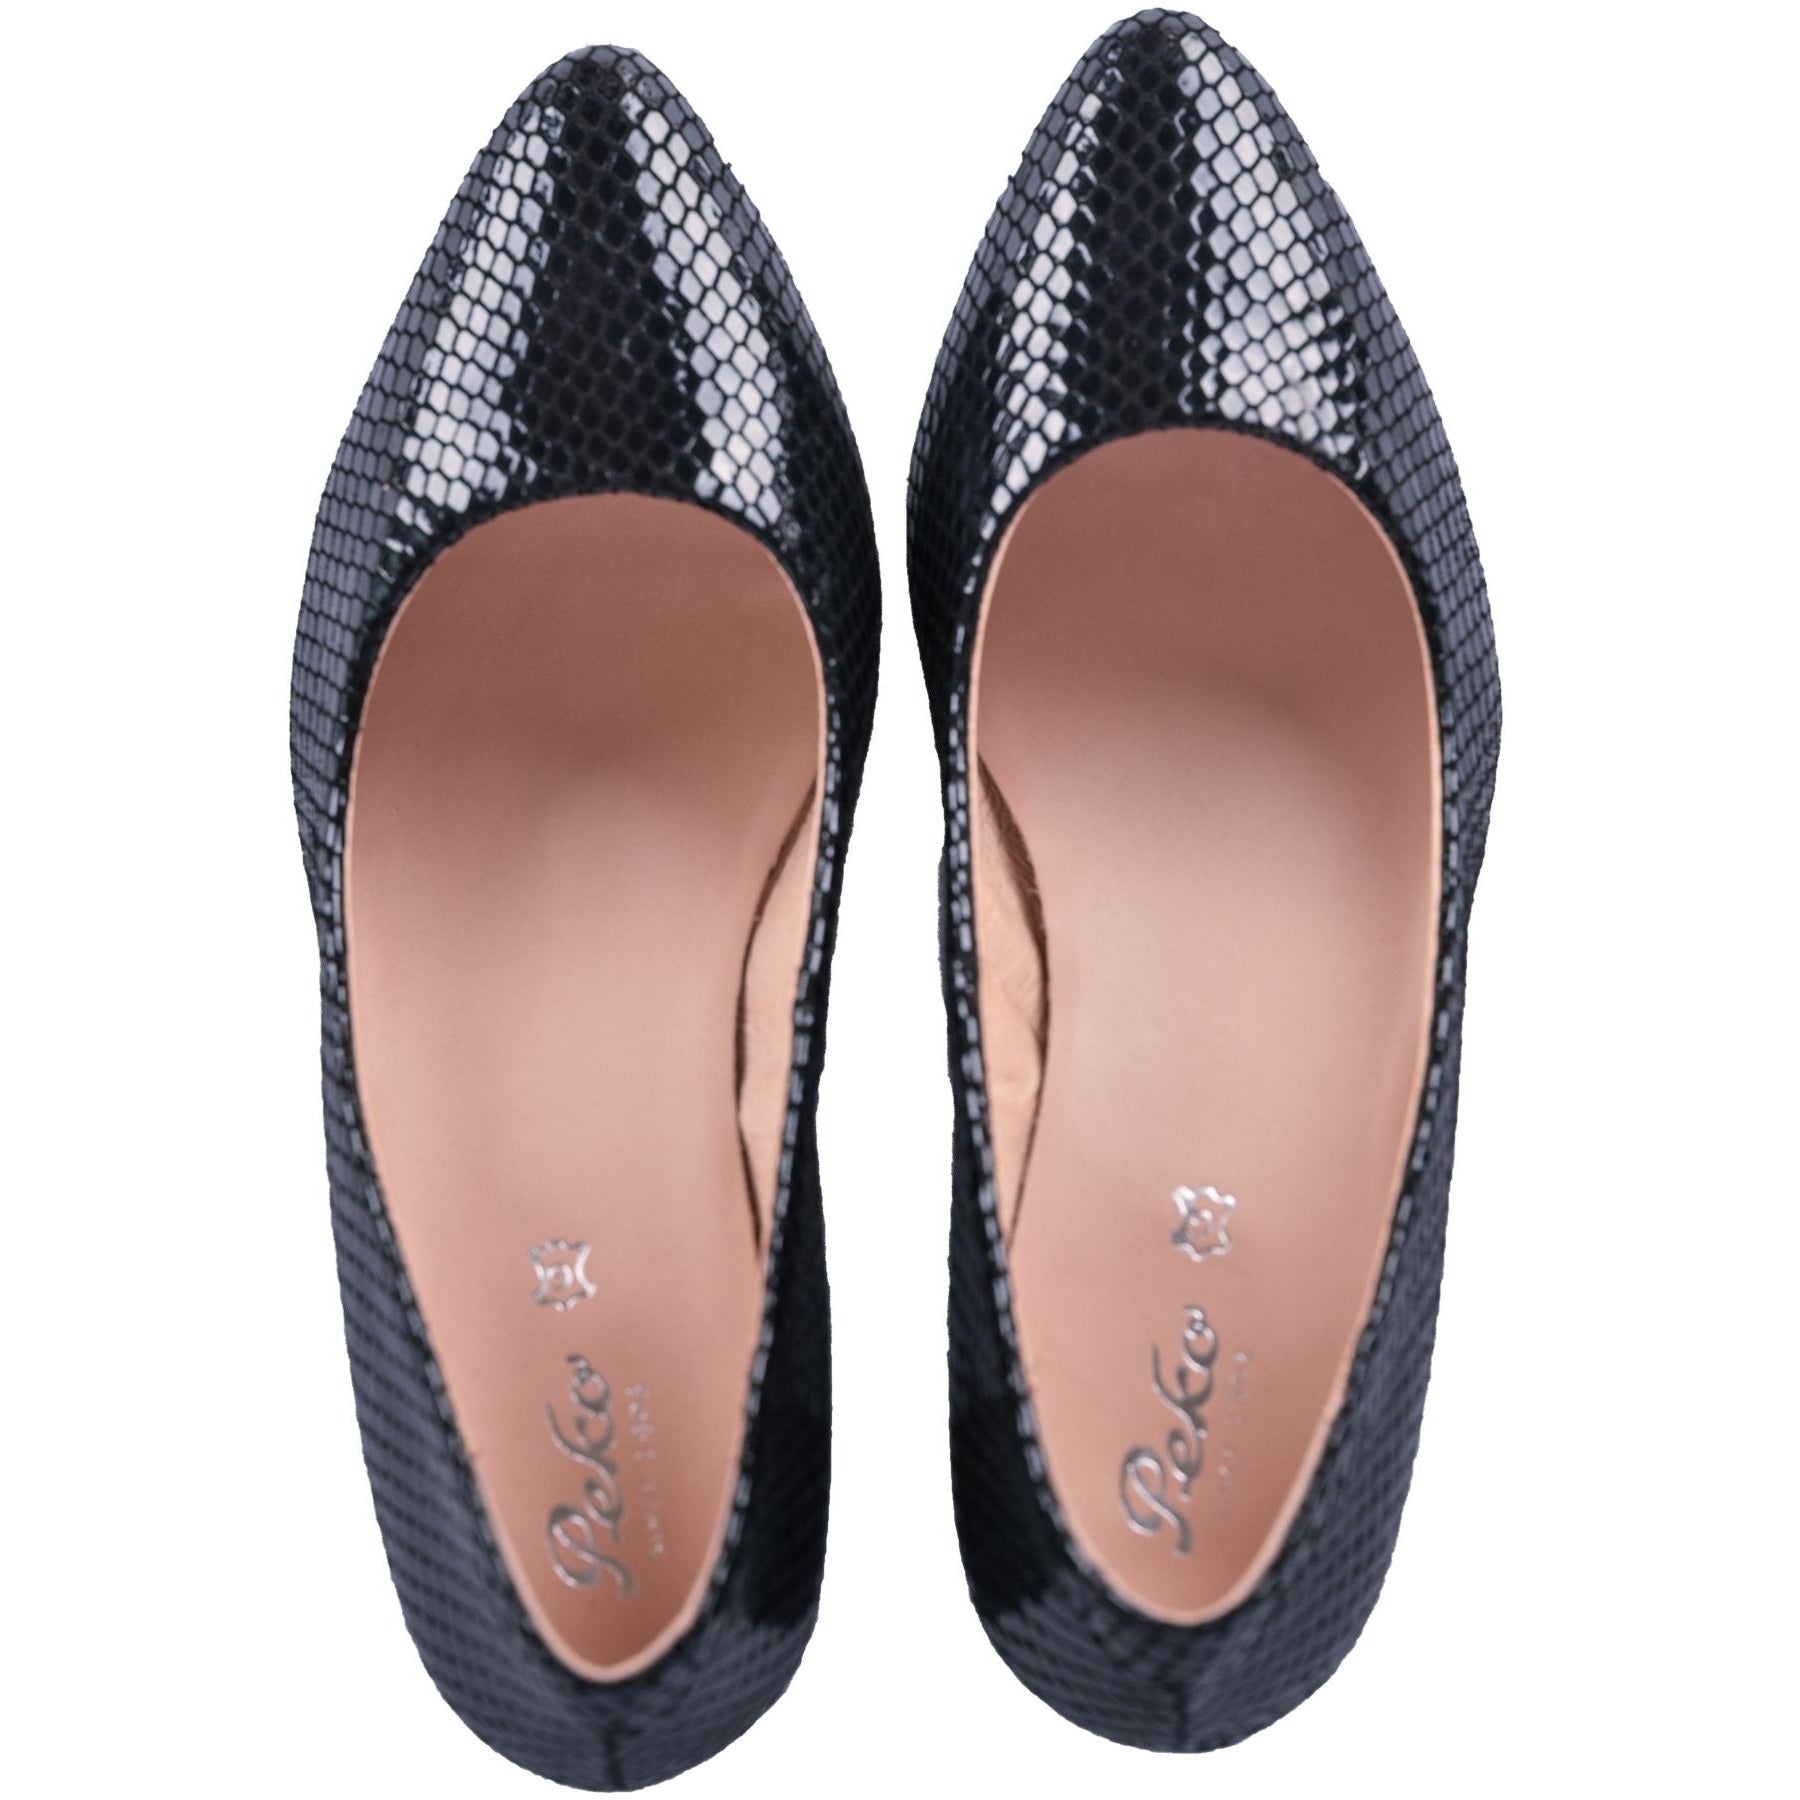 ROSINA glossy women black heel pump shoes - feelgoodshoes.ae